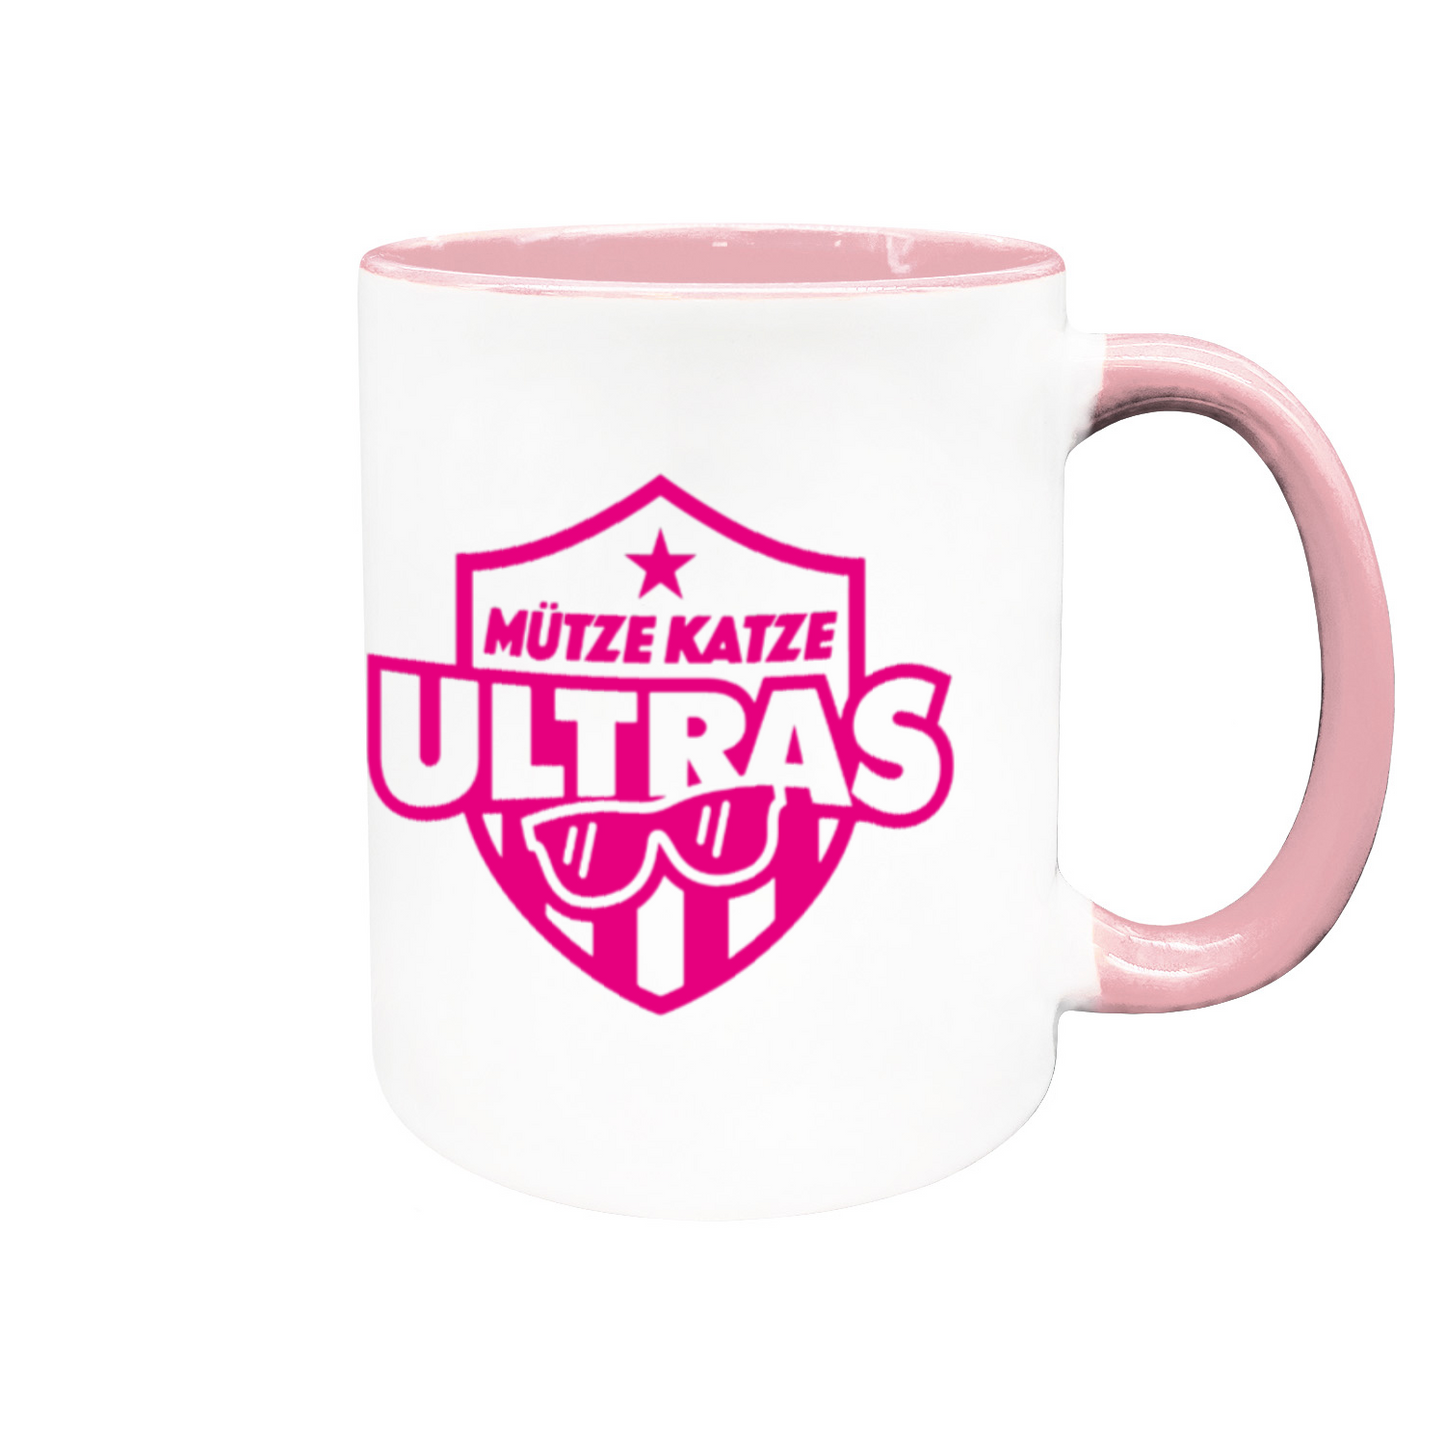 Mütze Katze Ultras - Tasse